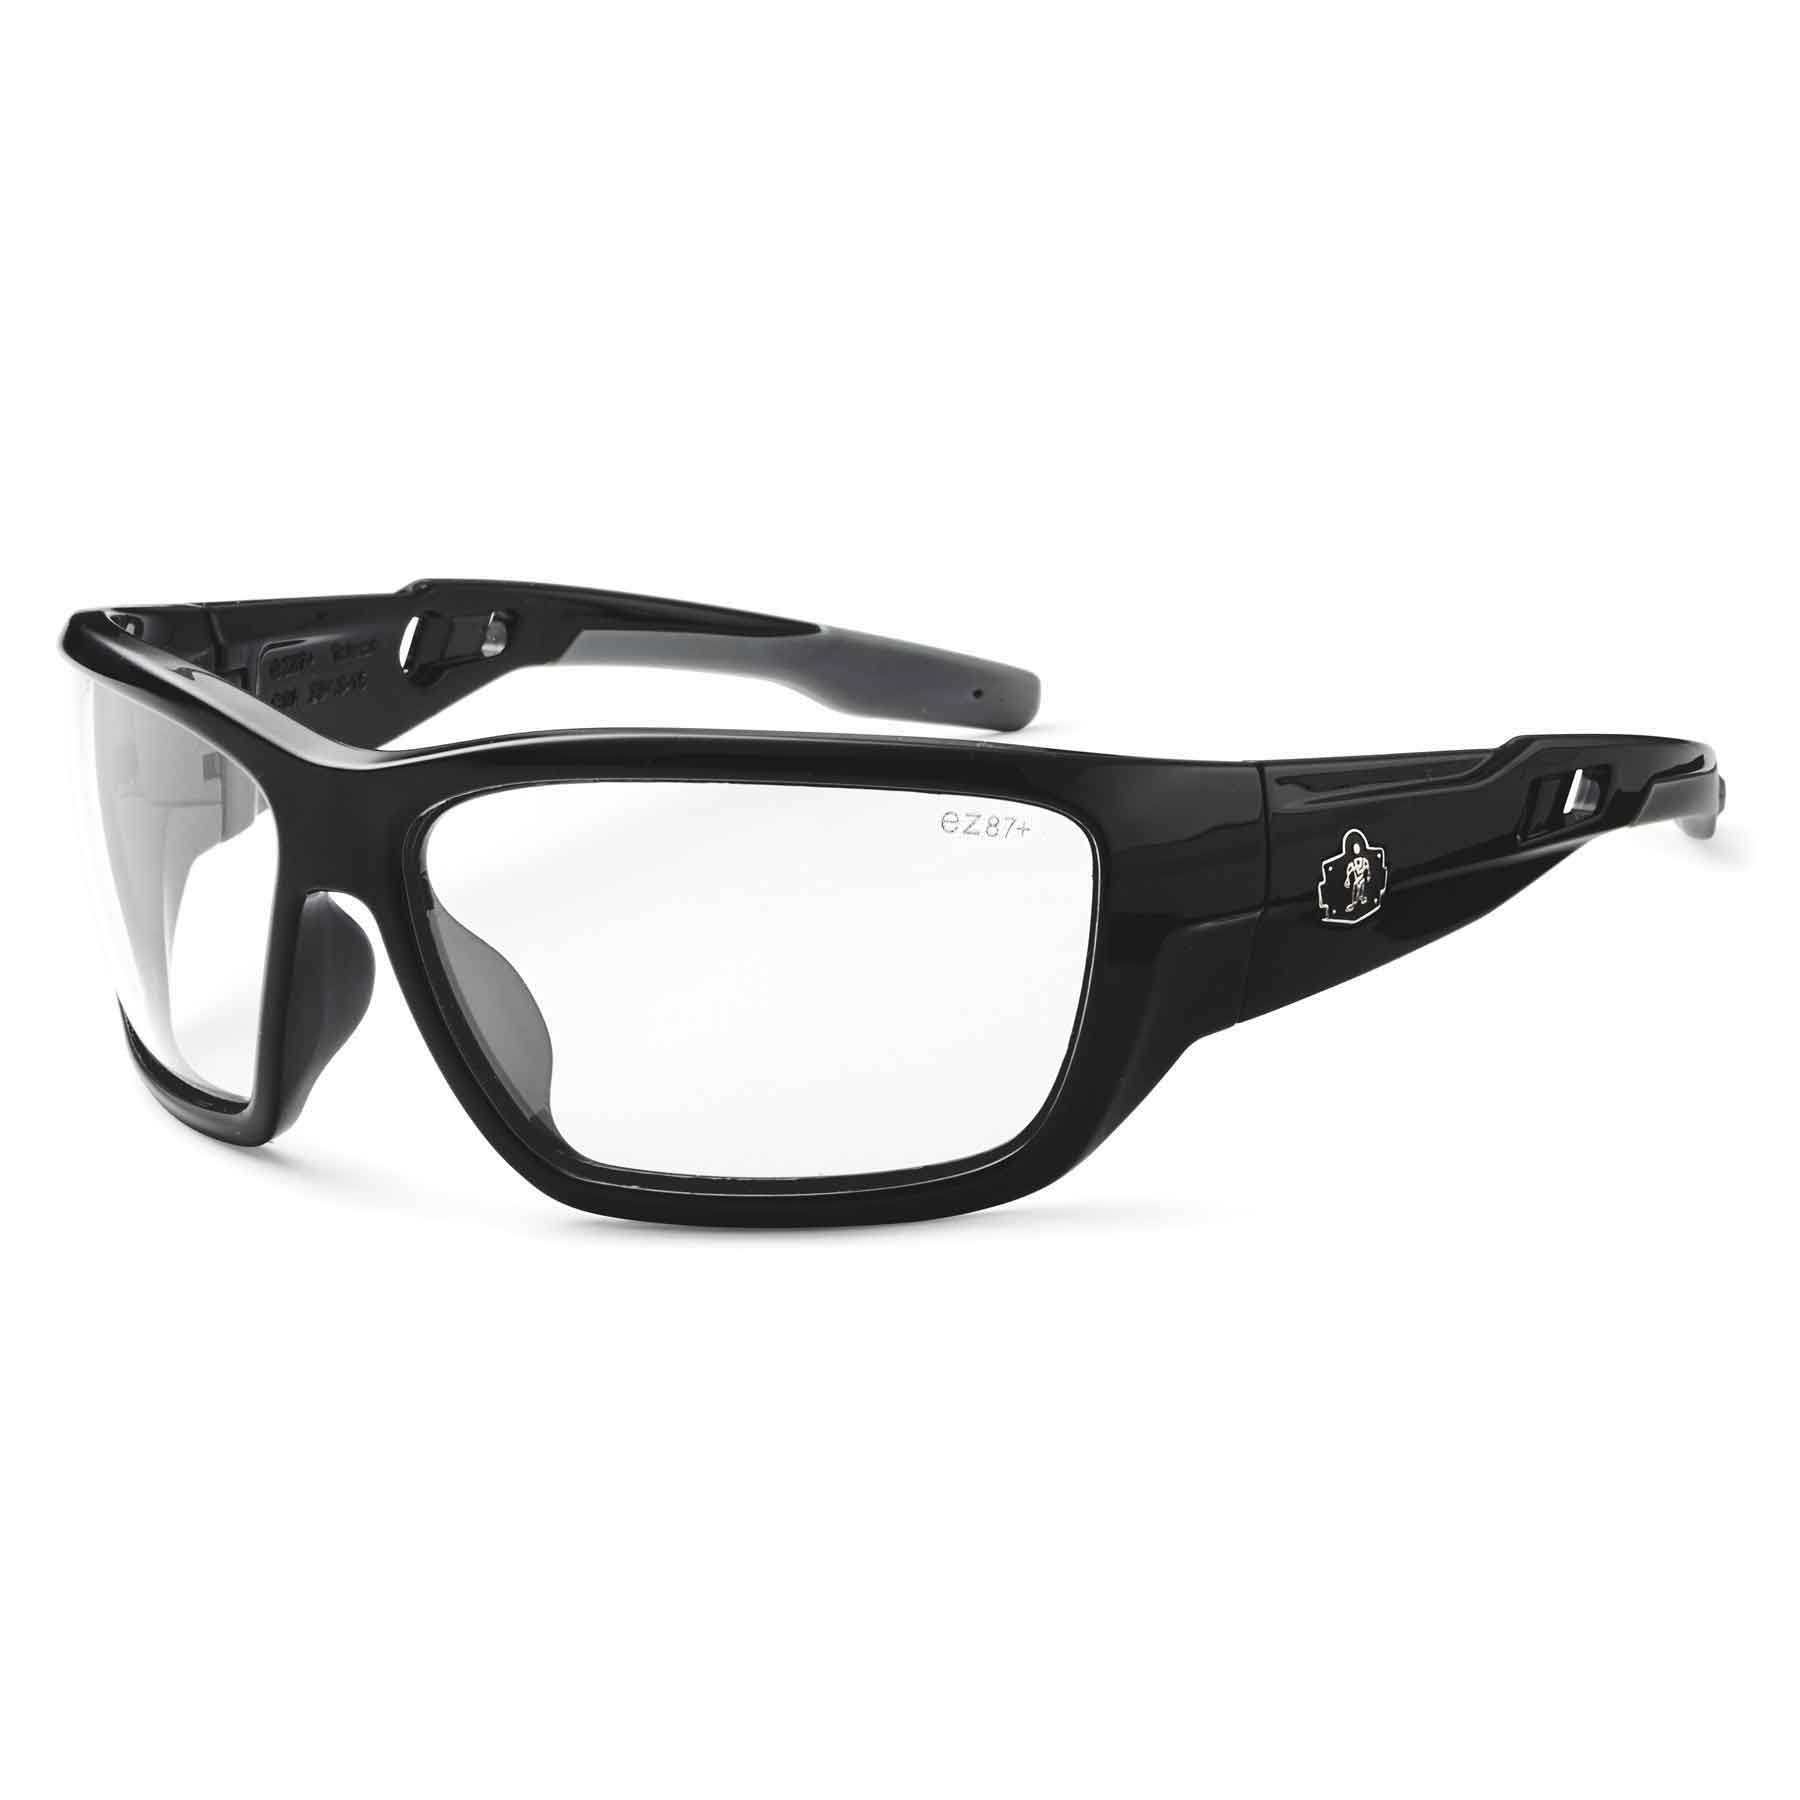 Baldr Safety Glasses, Sunglasses | Ergodyne